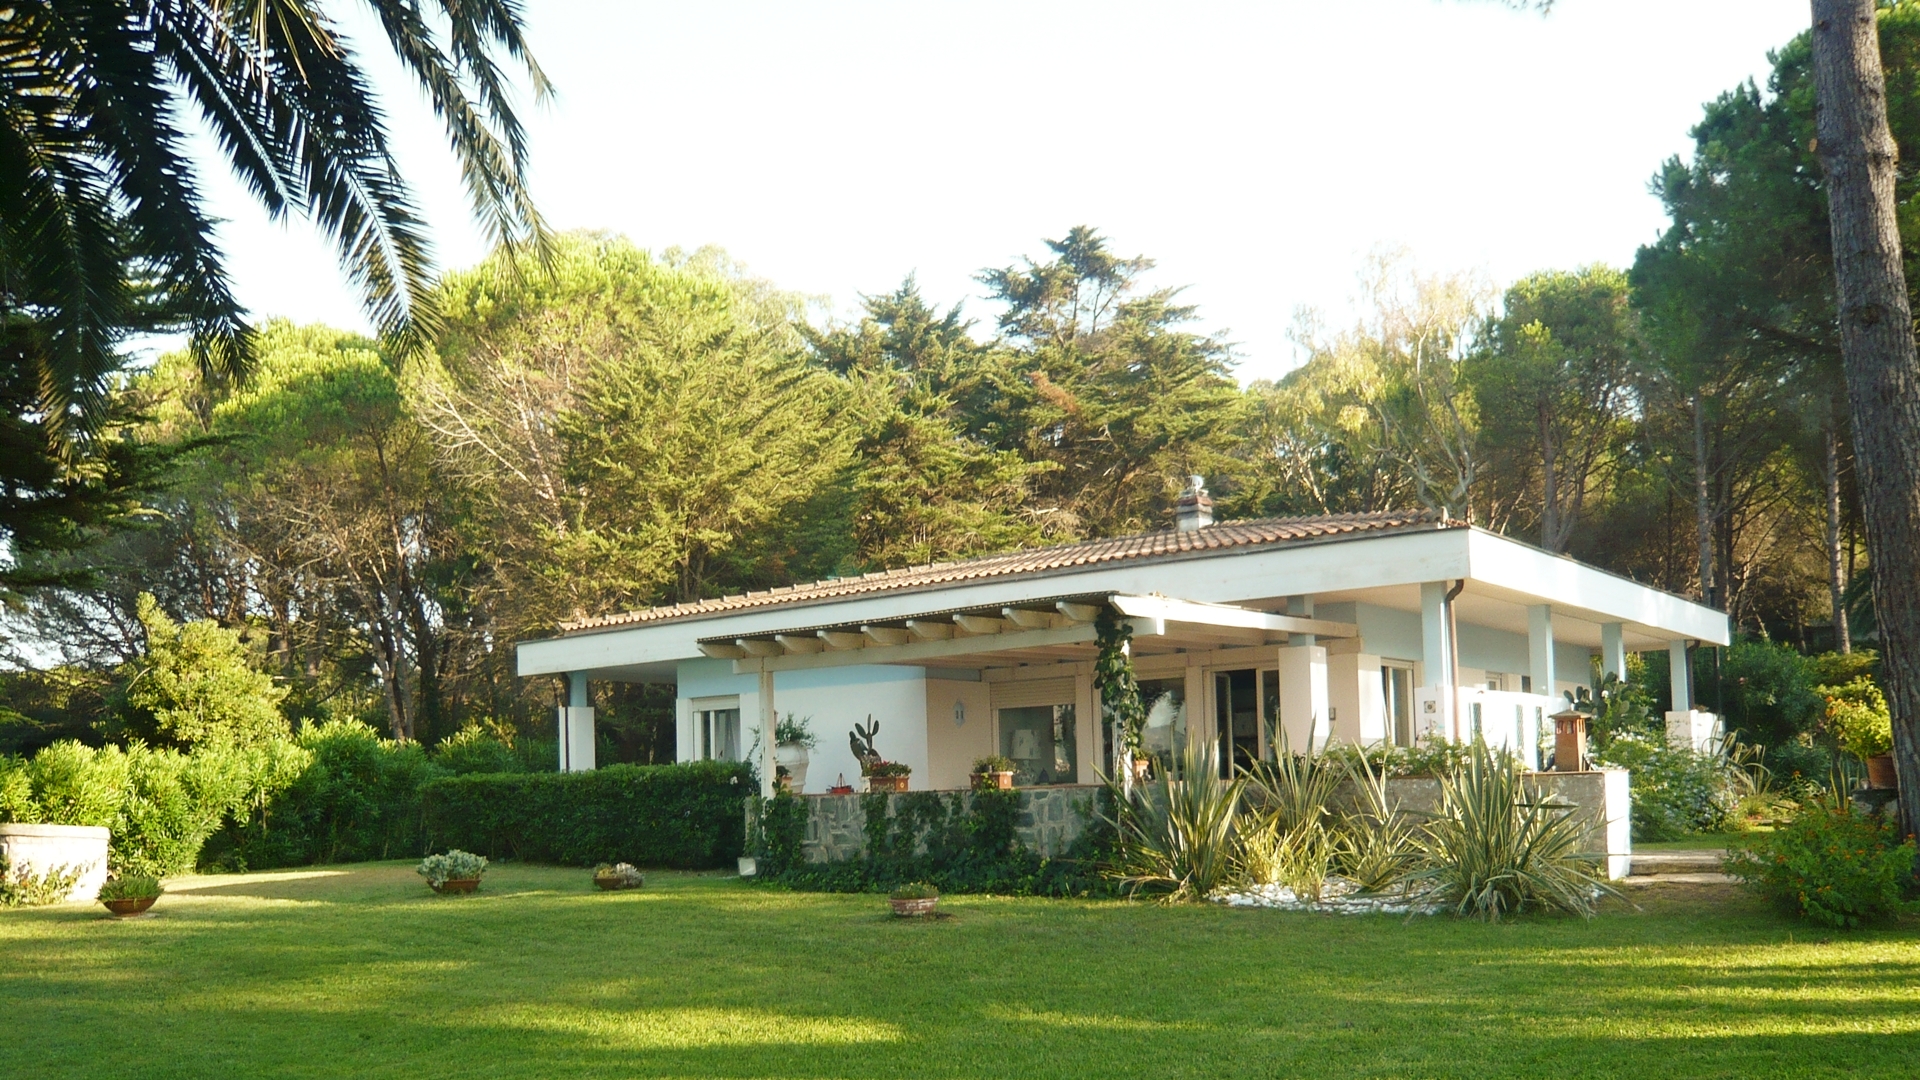 Villa mit großem Garten in der Nähe des Meeres - Insel Elba